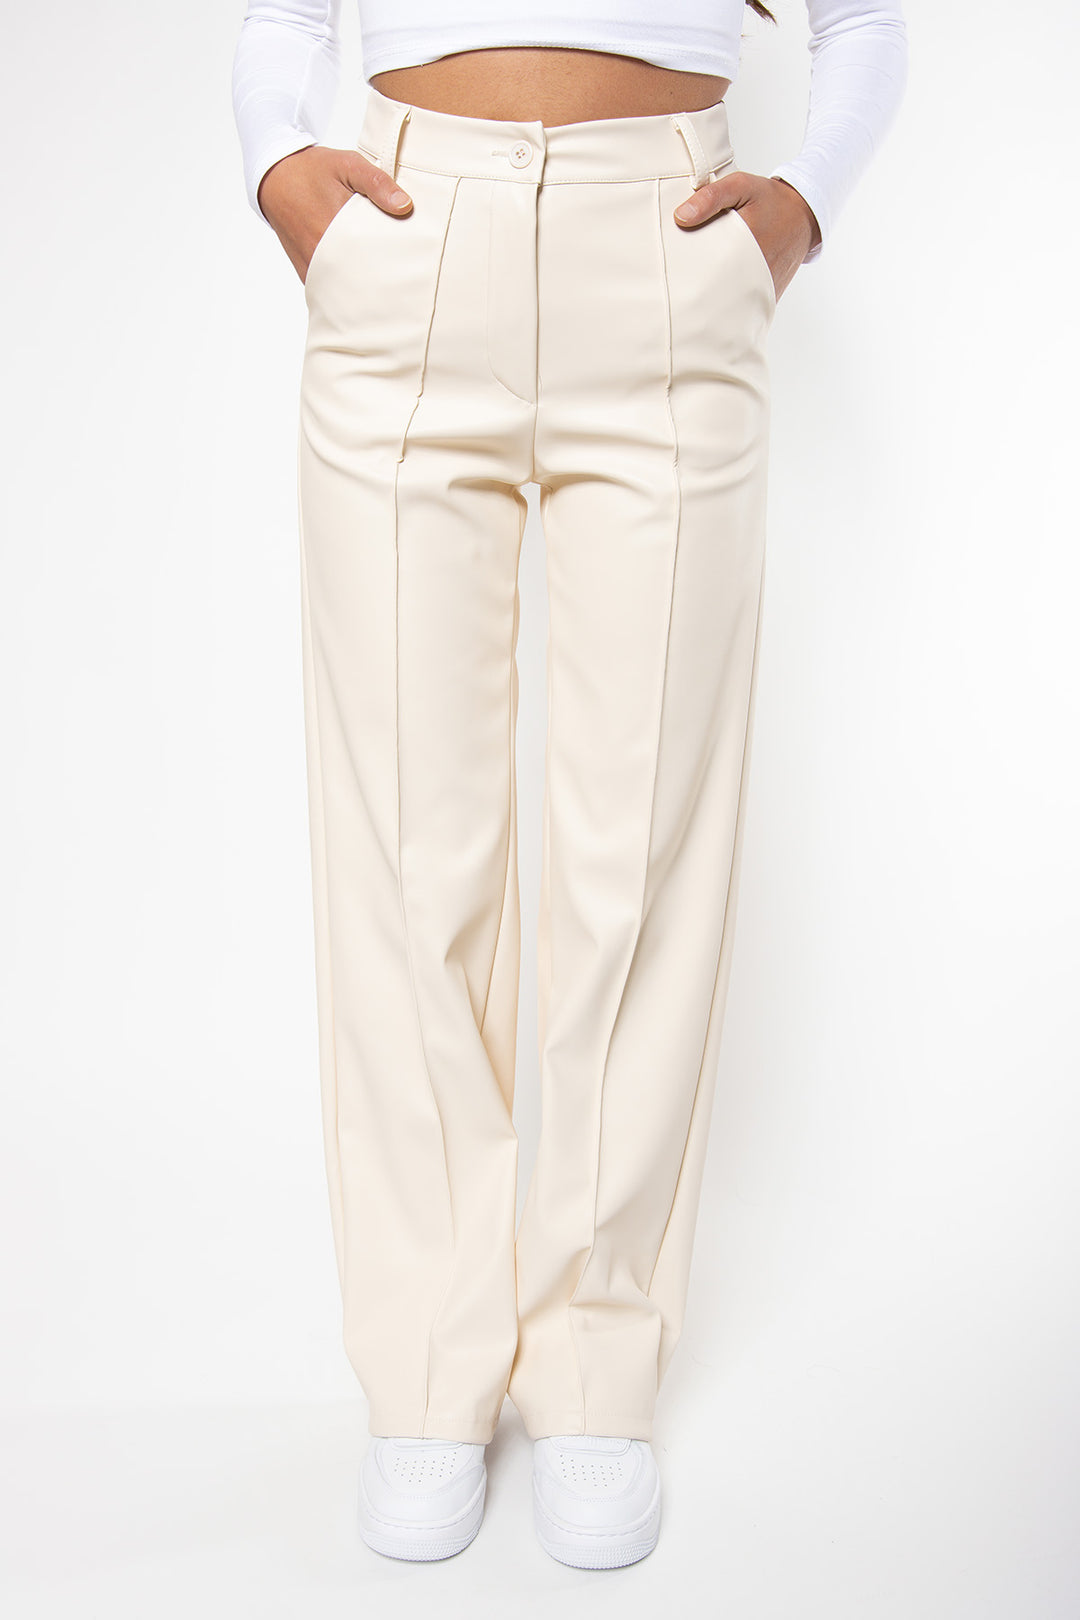 Logan Leatherlook Straight Pants - Cream Pants Routines Fashion   